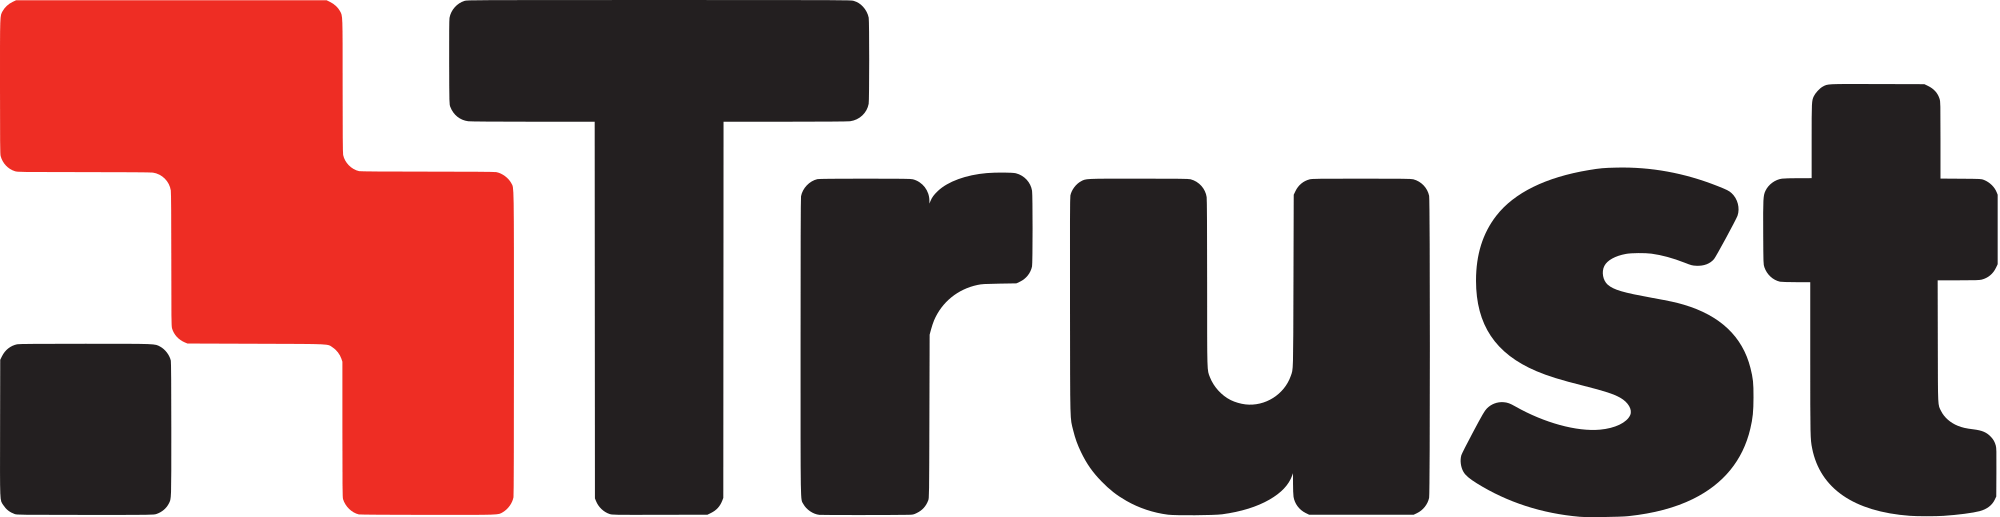 Trust Logo - Trust logo.svg